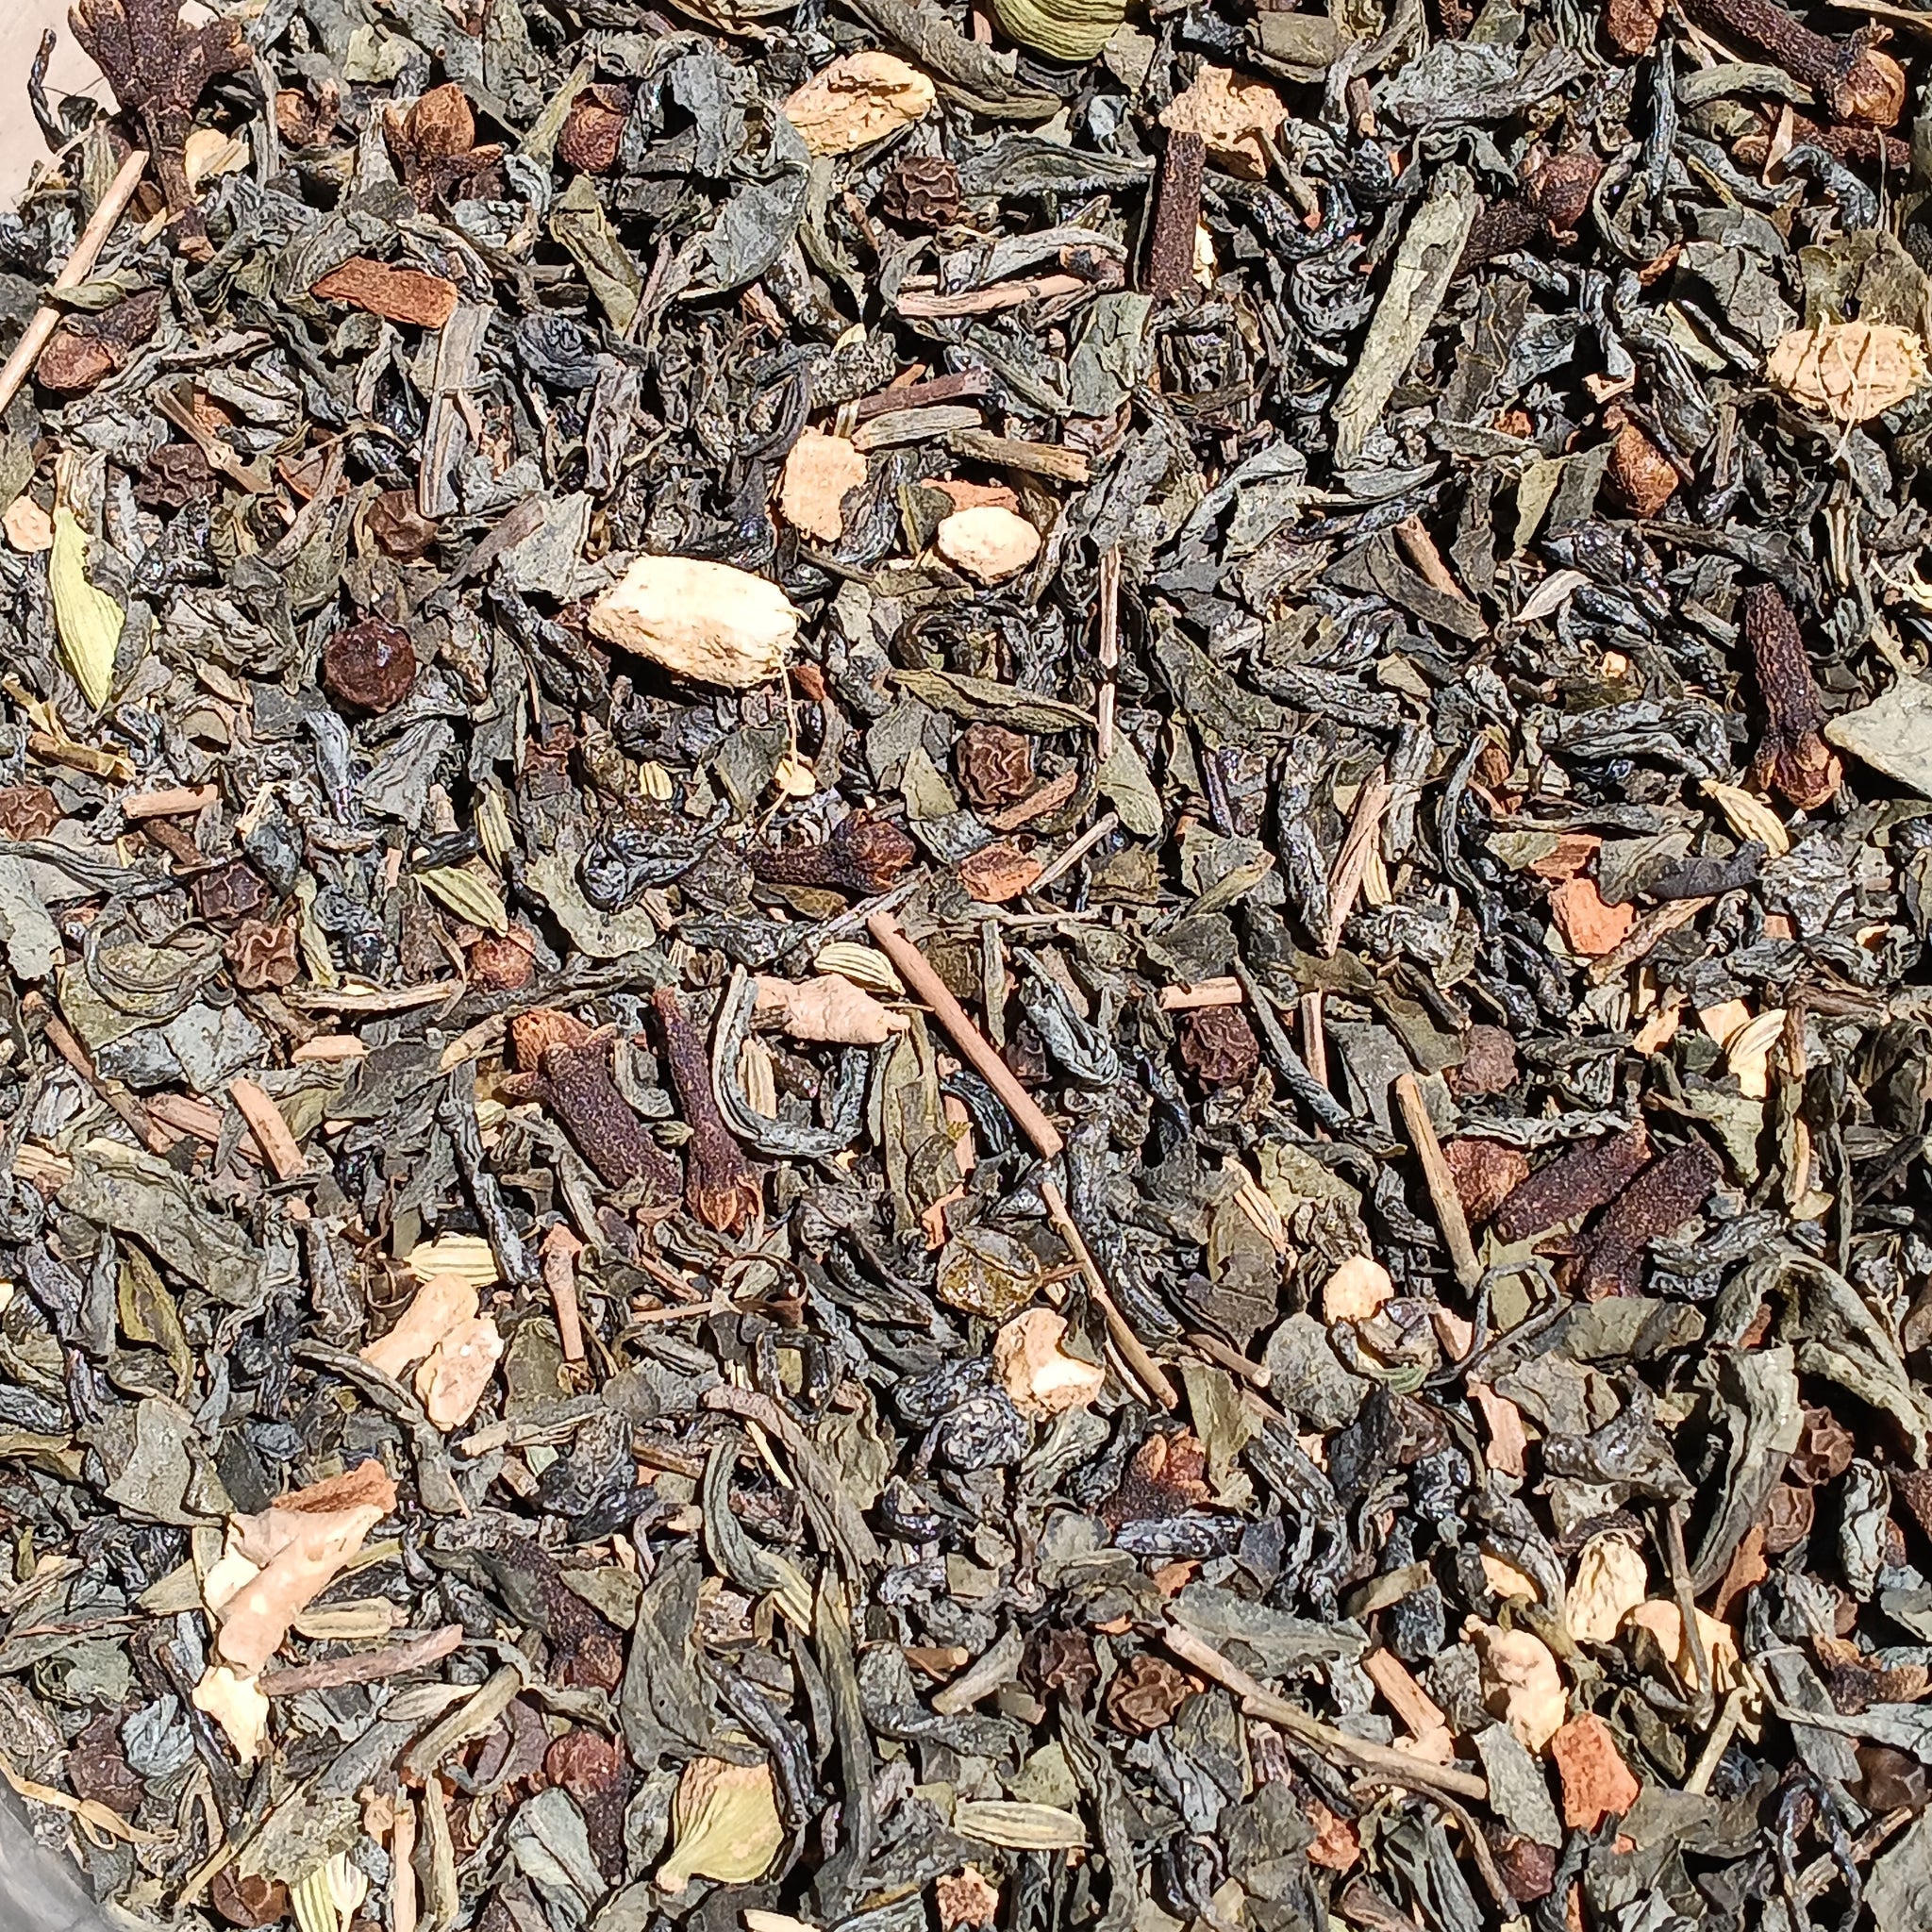 Grüner Tee "Masala".